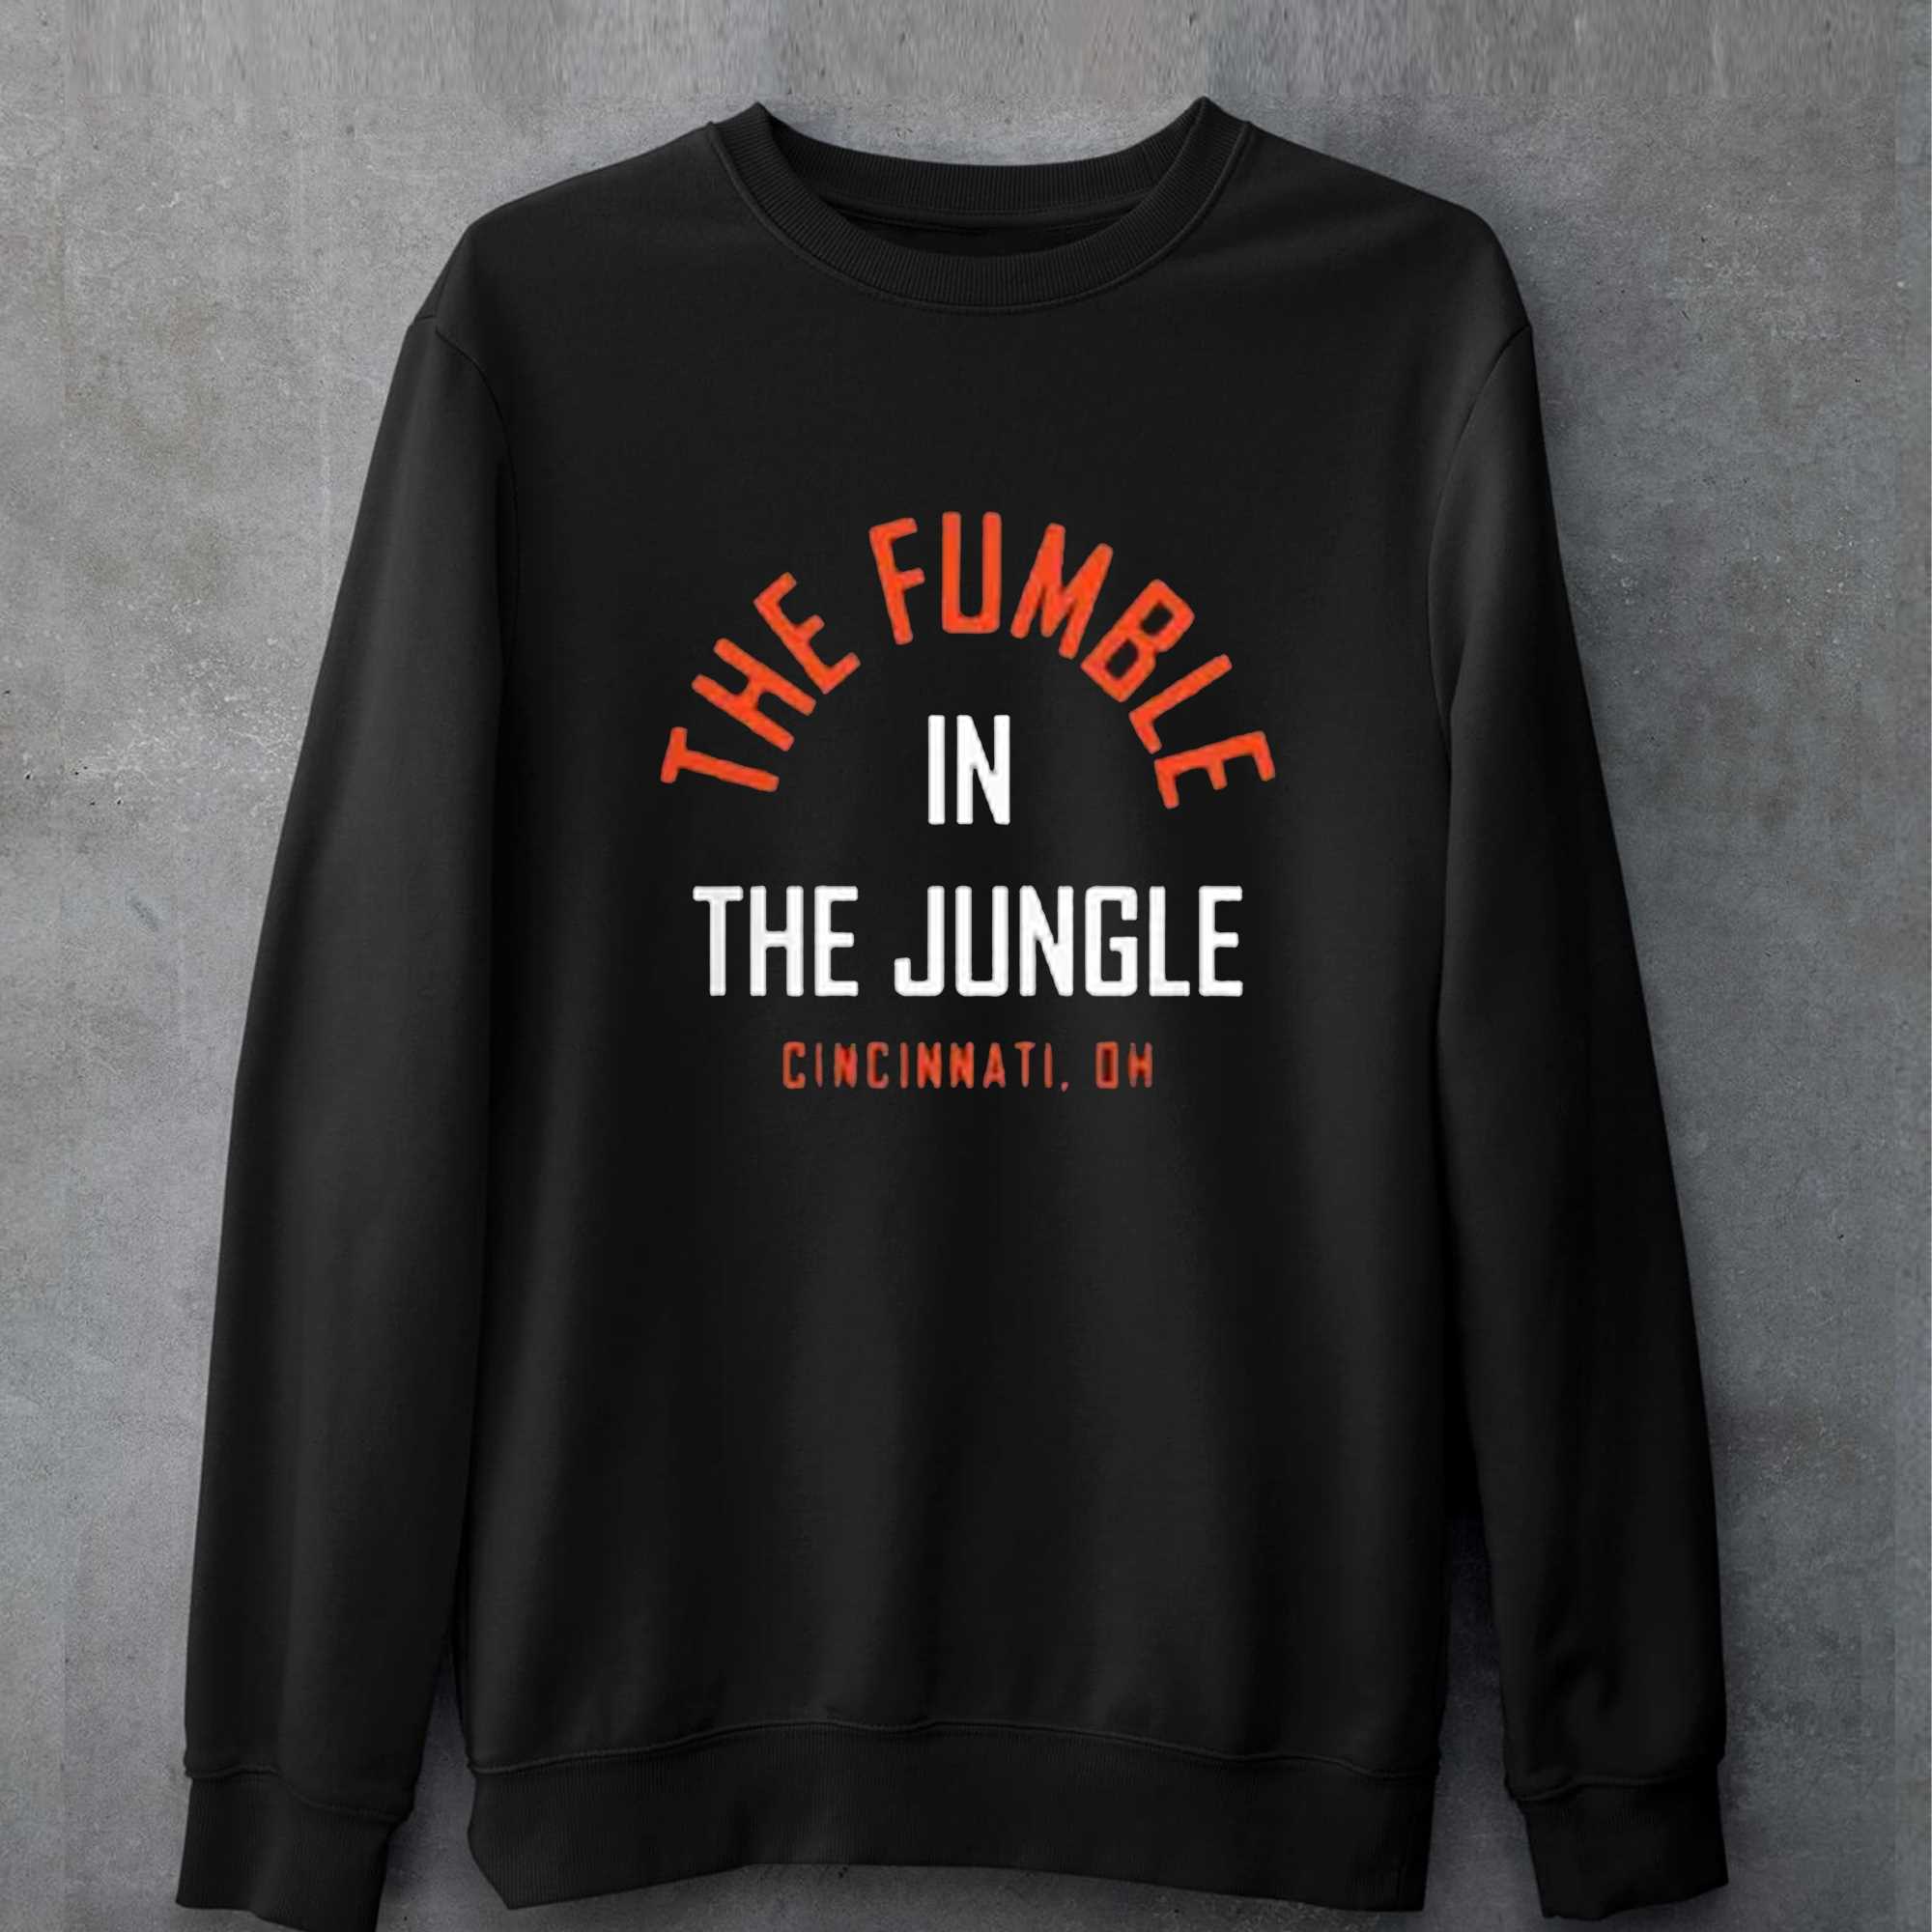 The Fumble In The Jungle Shirt - Cincinnati Bengals 